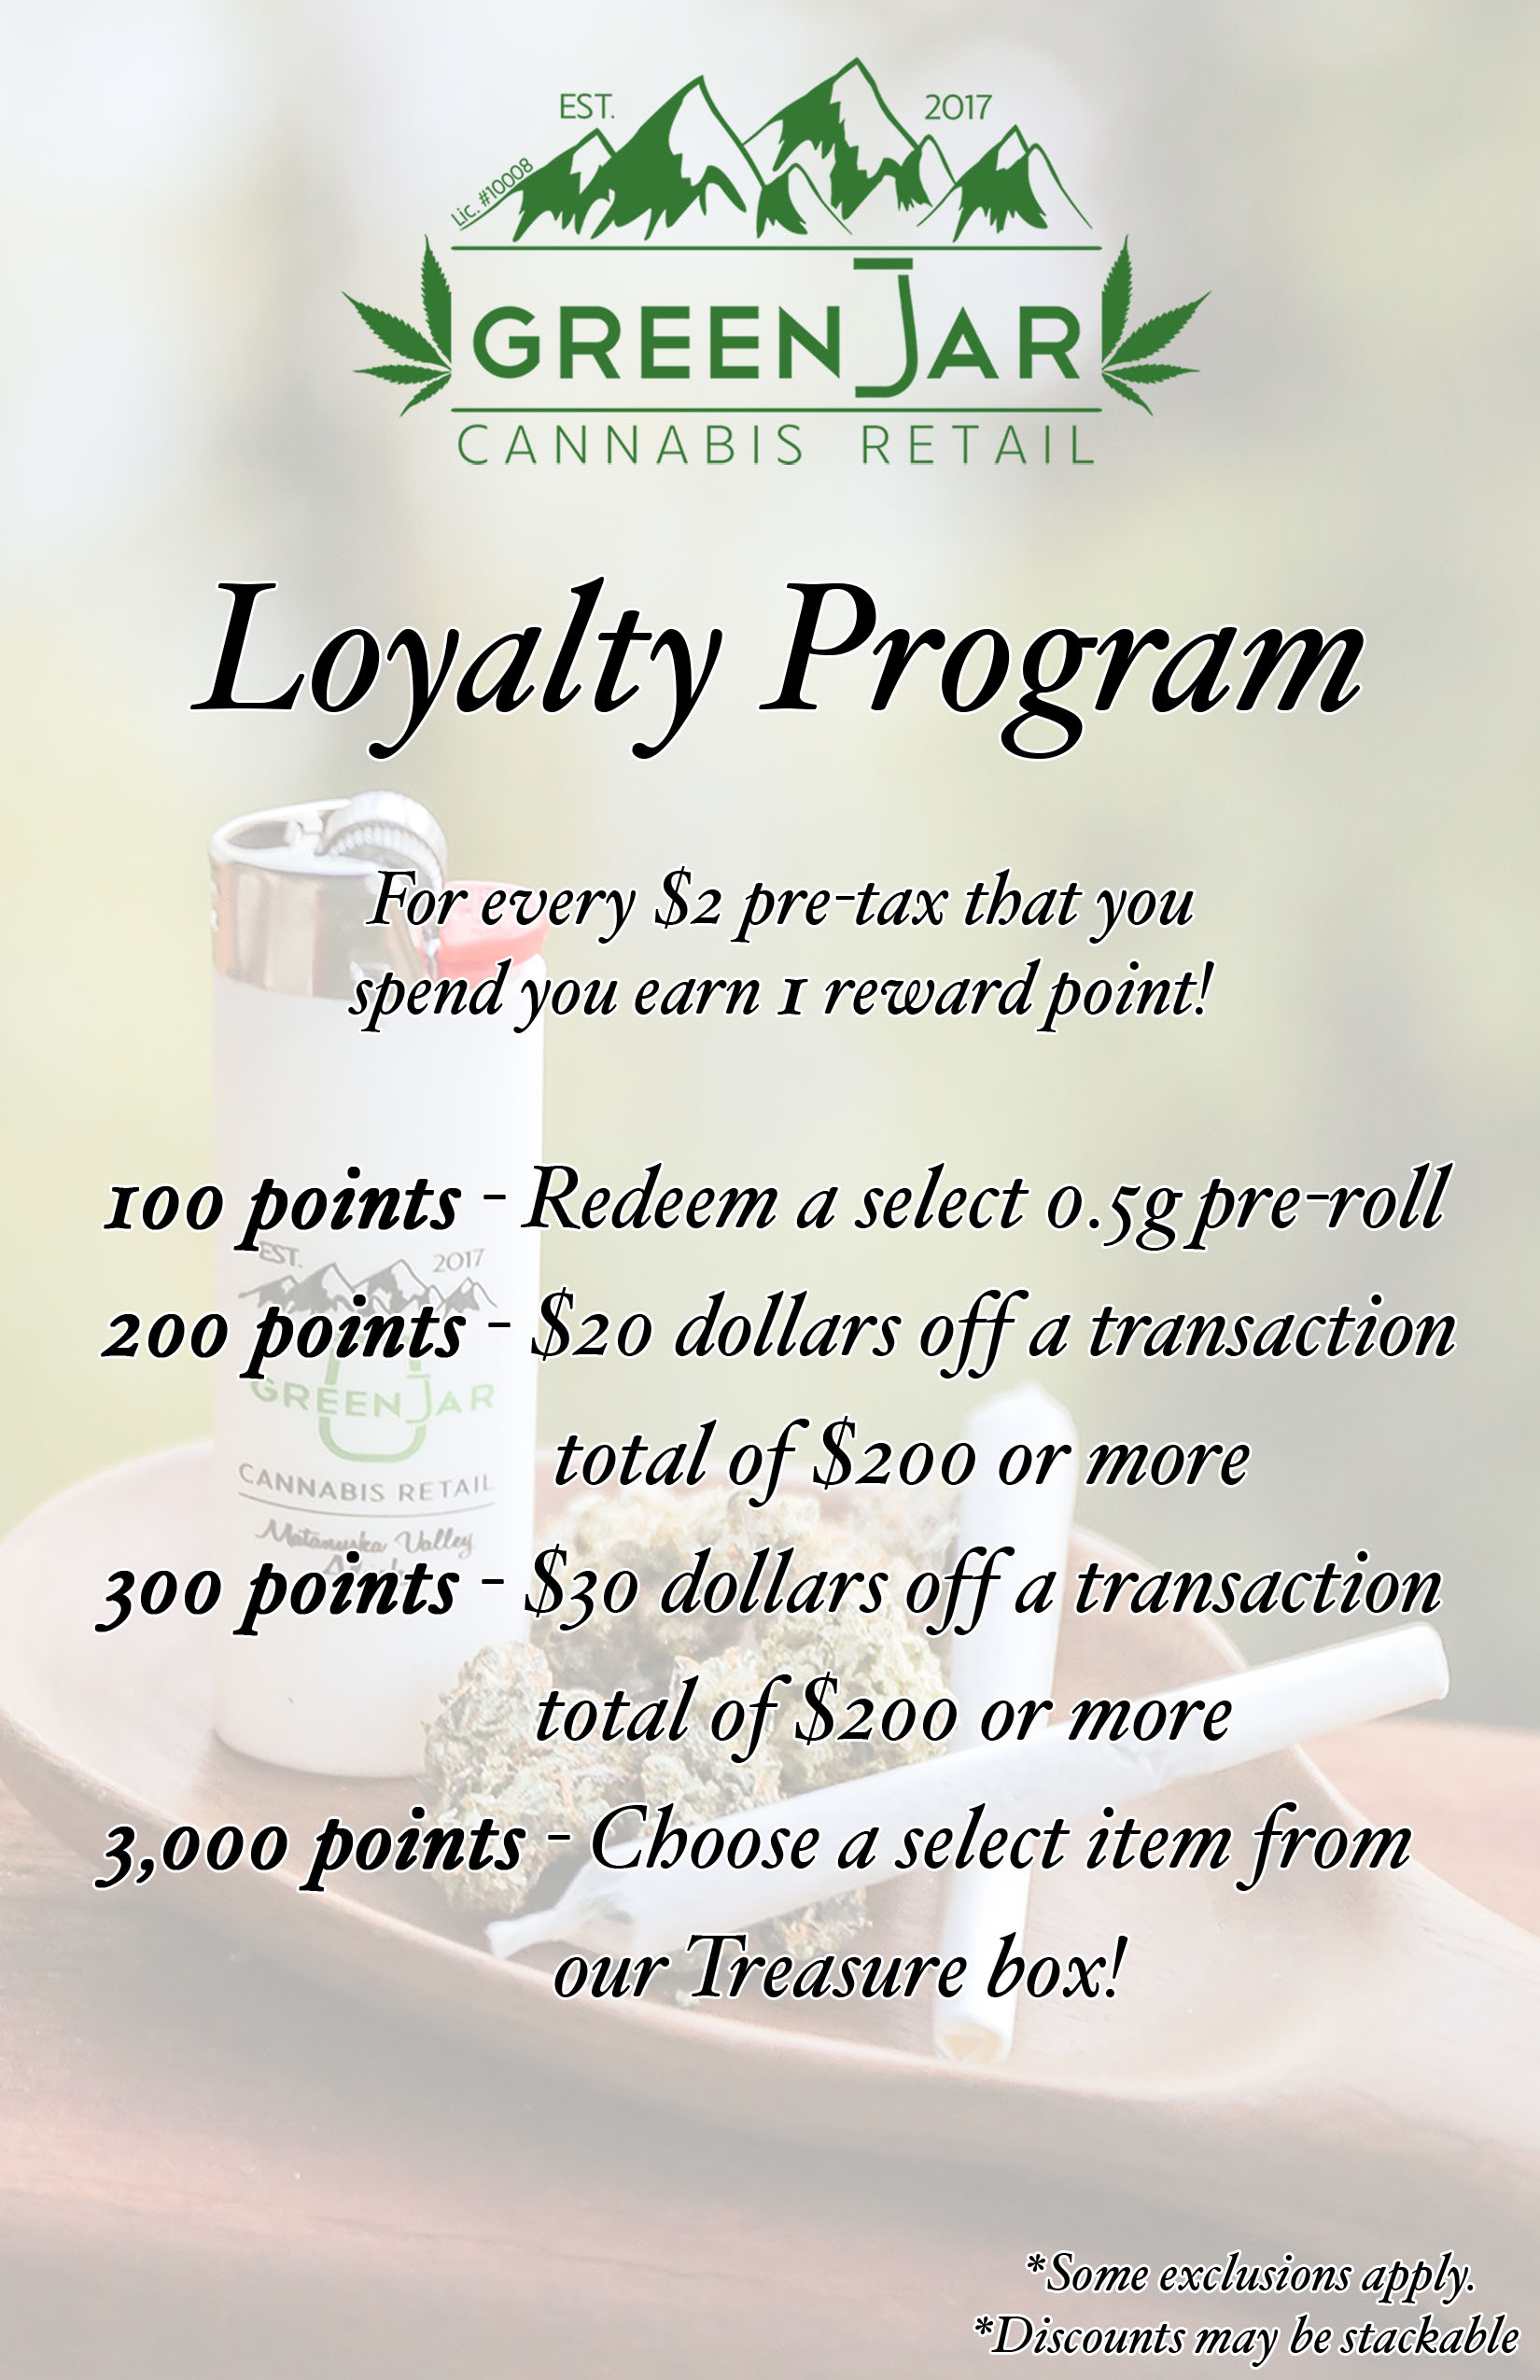 The Green Jar loyalty program